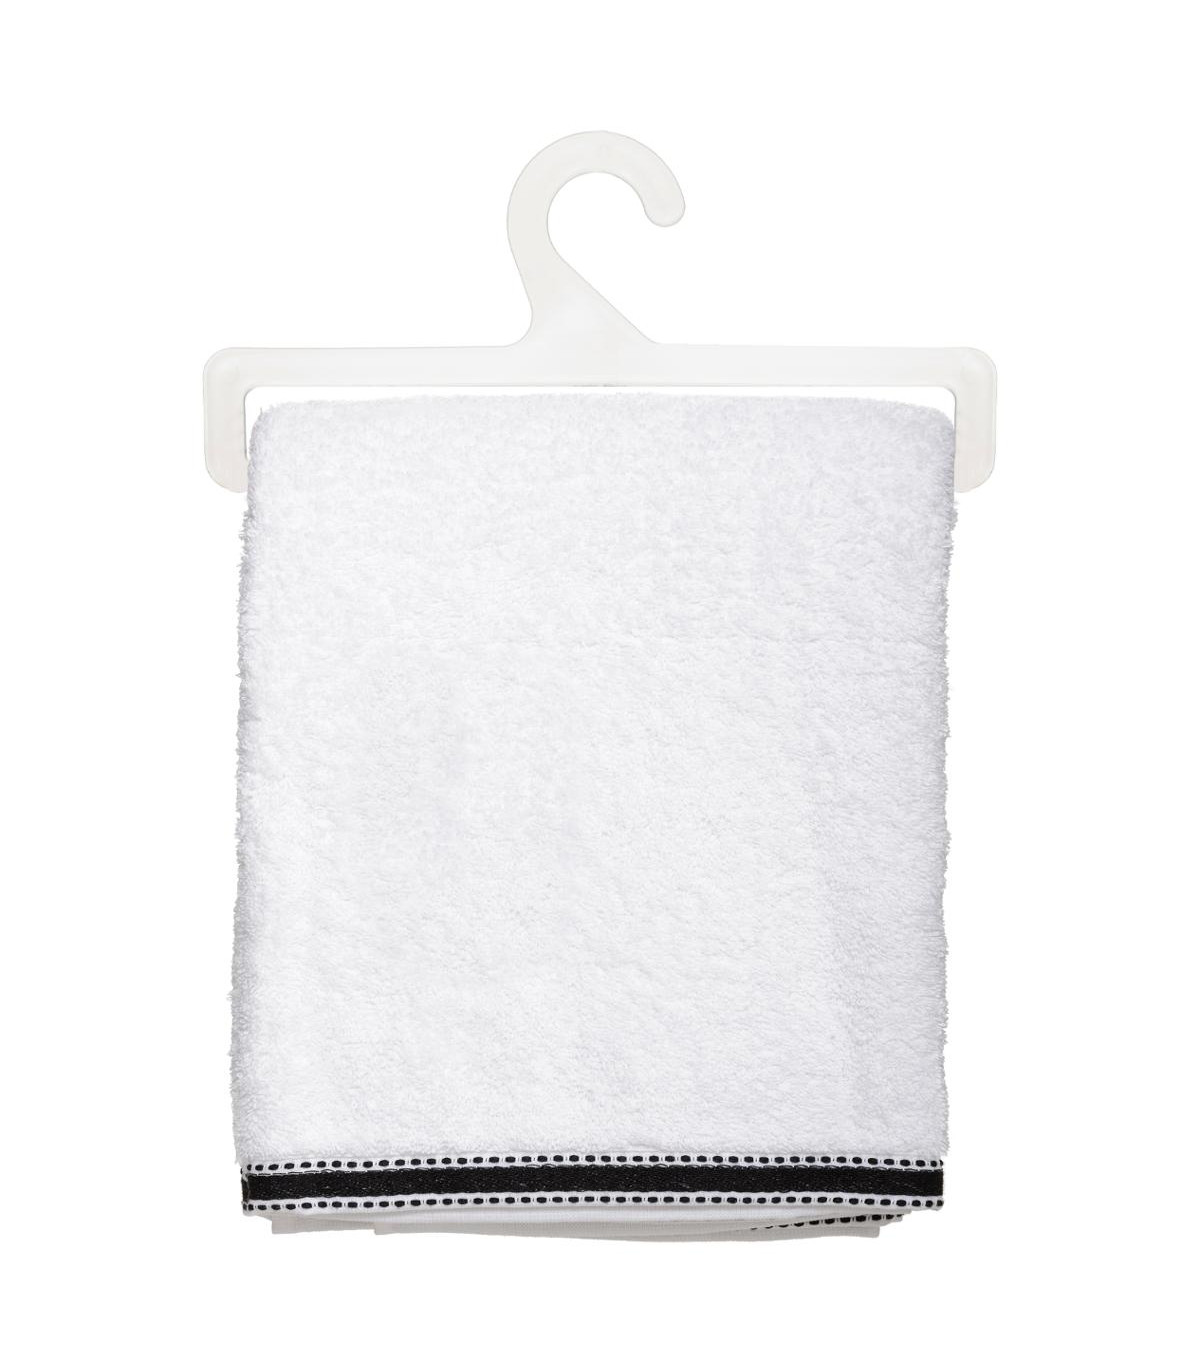 drap-de-bain-joia-blanc-tissu-eponge-100-x-150-cm (2)